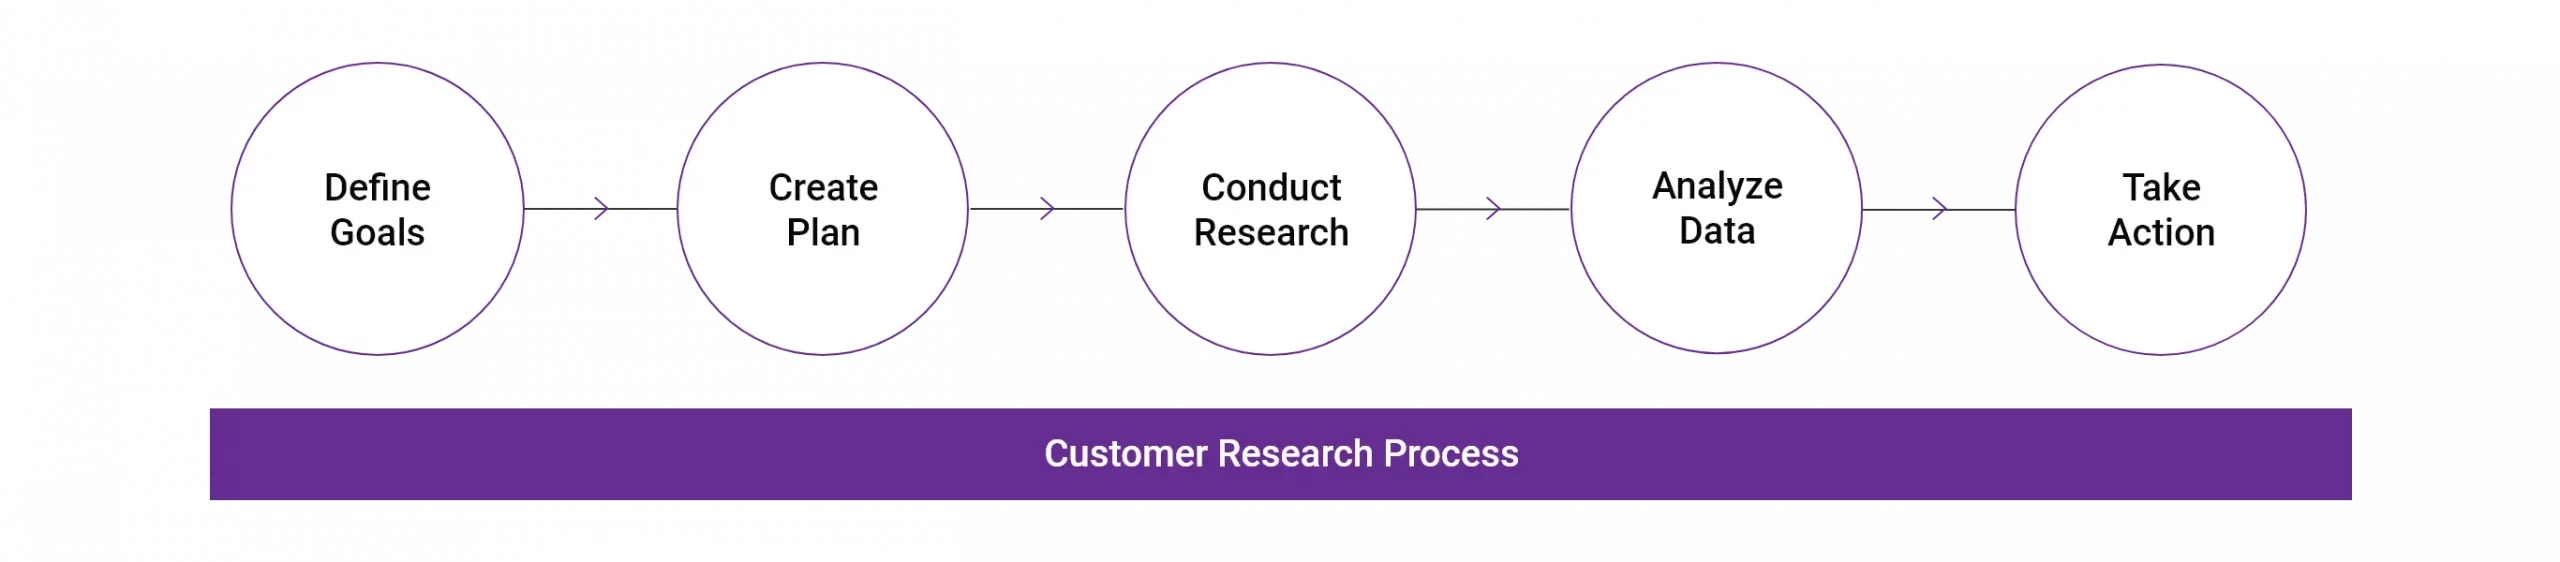 customer research process 